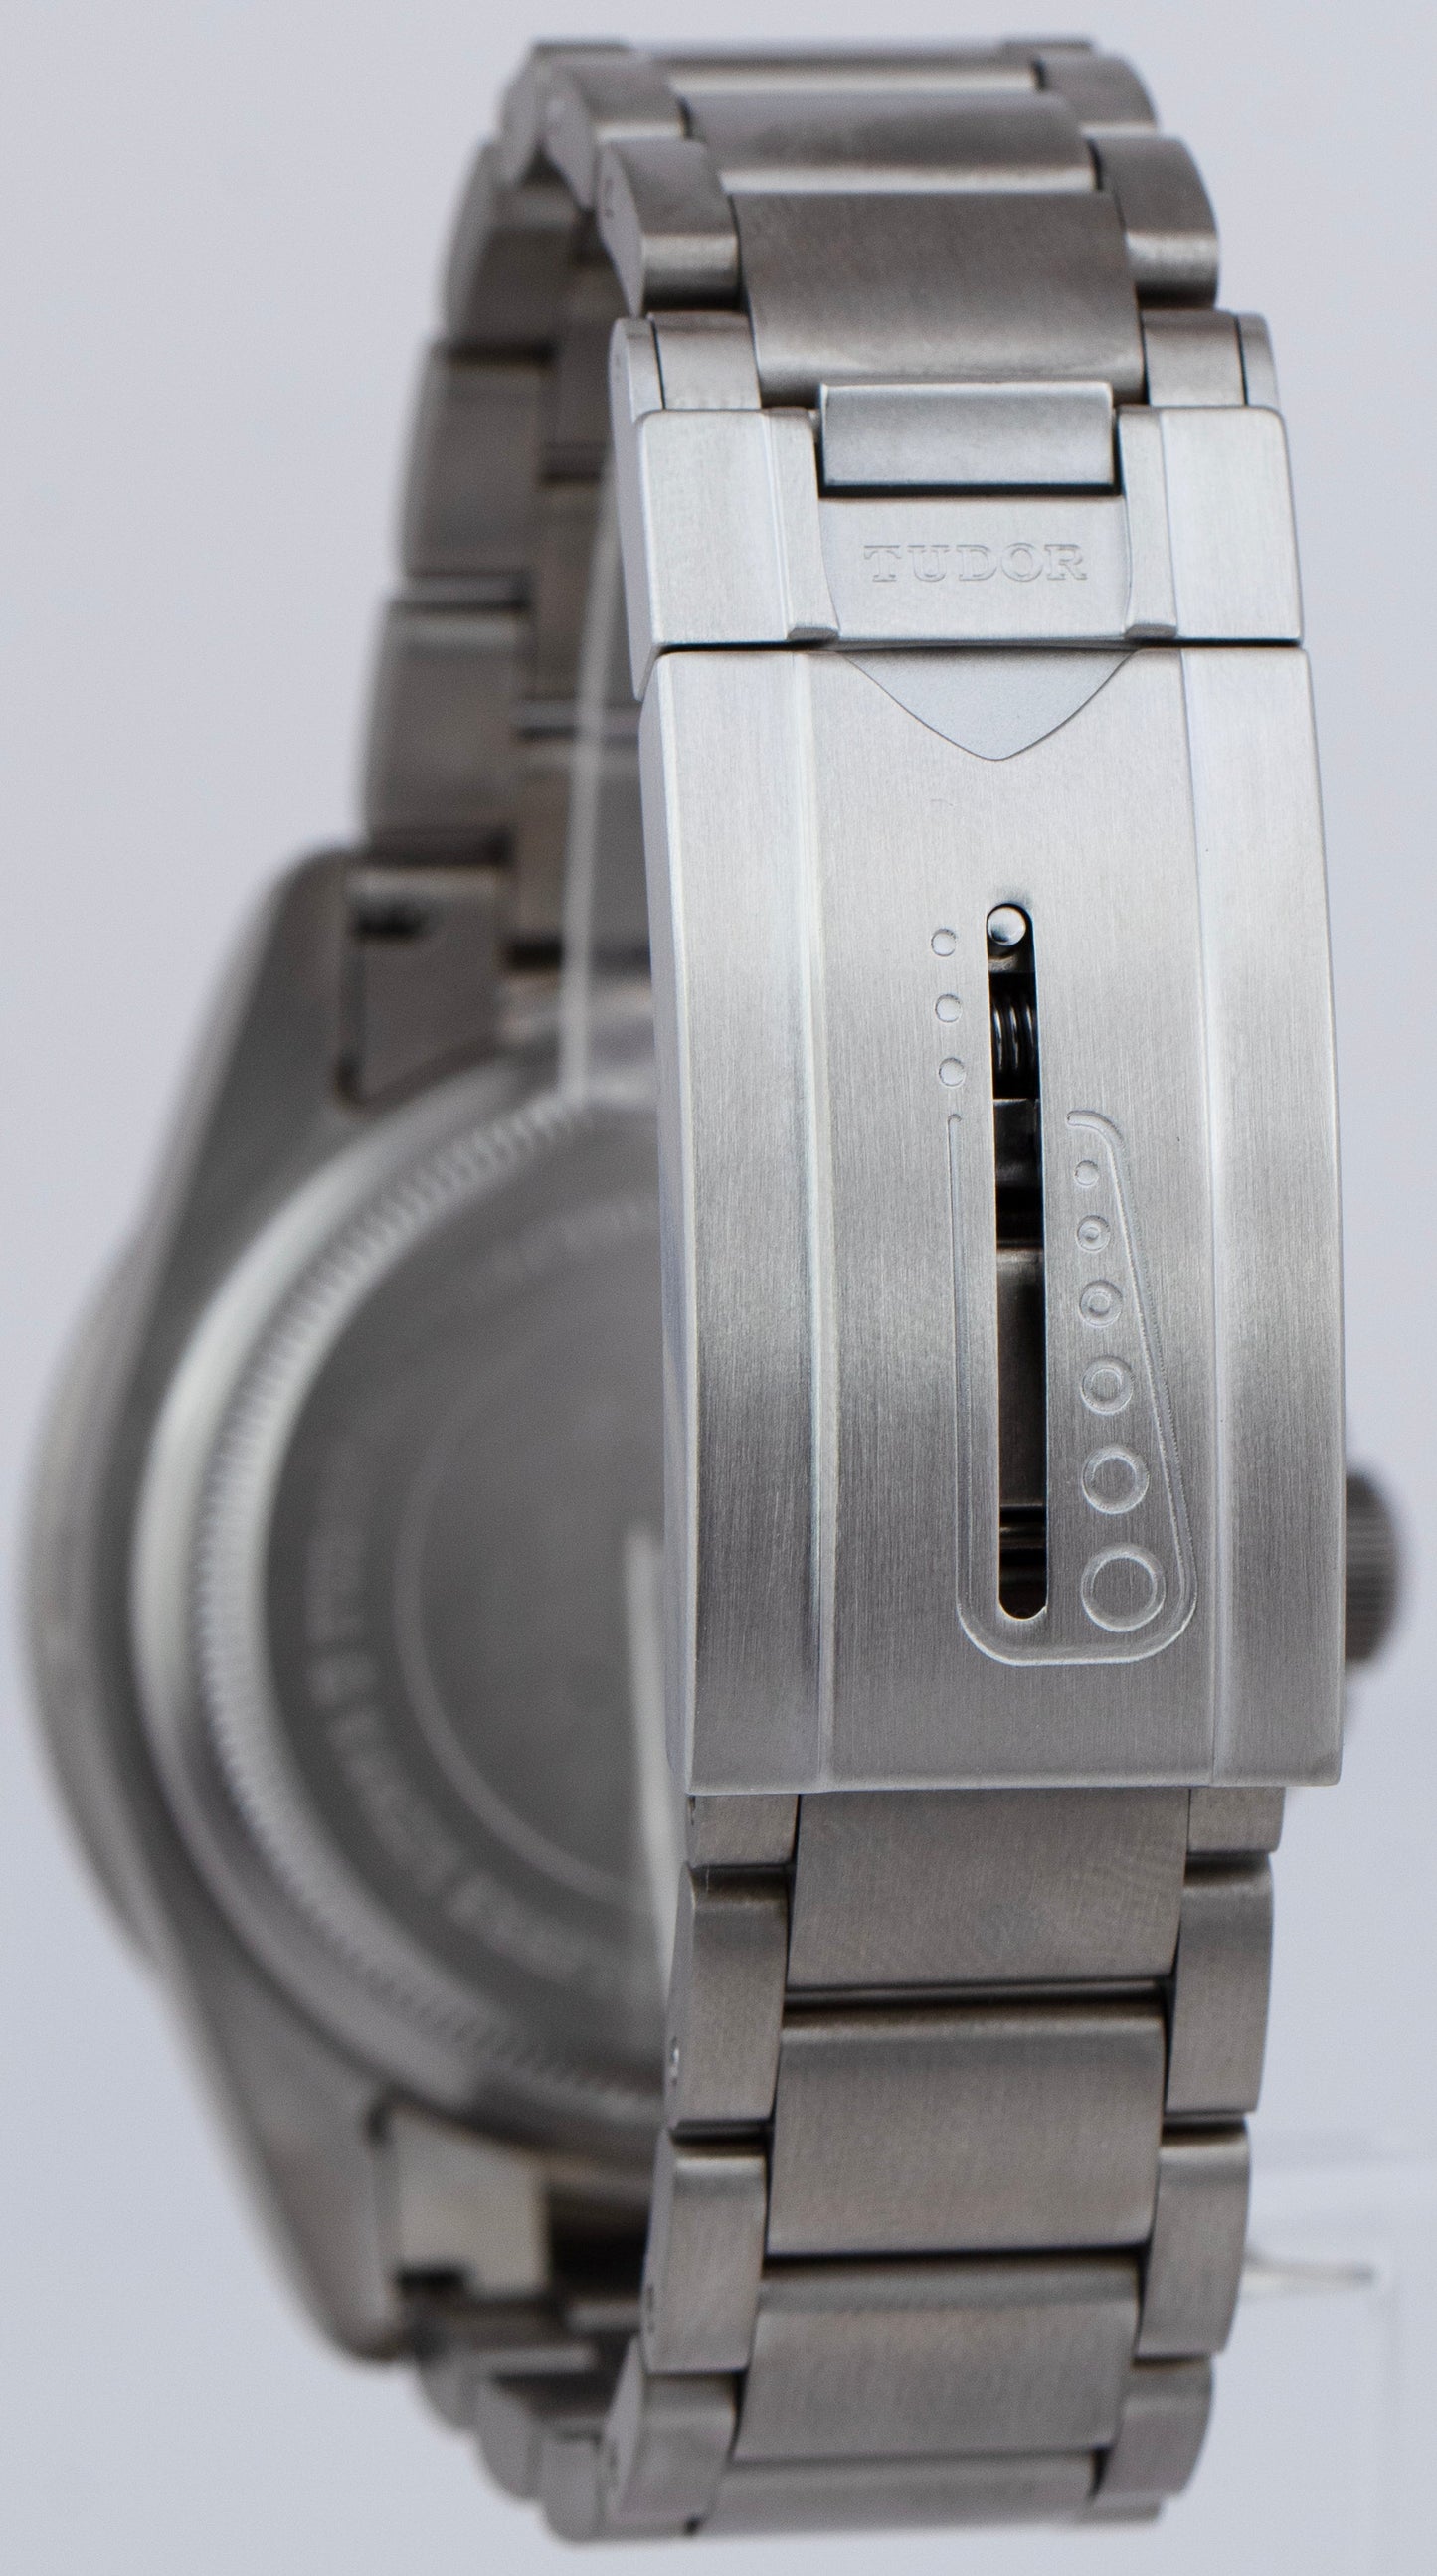 Tudor Pelagos Blue Titanium 42mm Automatic Date Watch 25600 TB CARD BOX